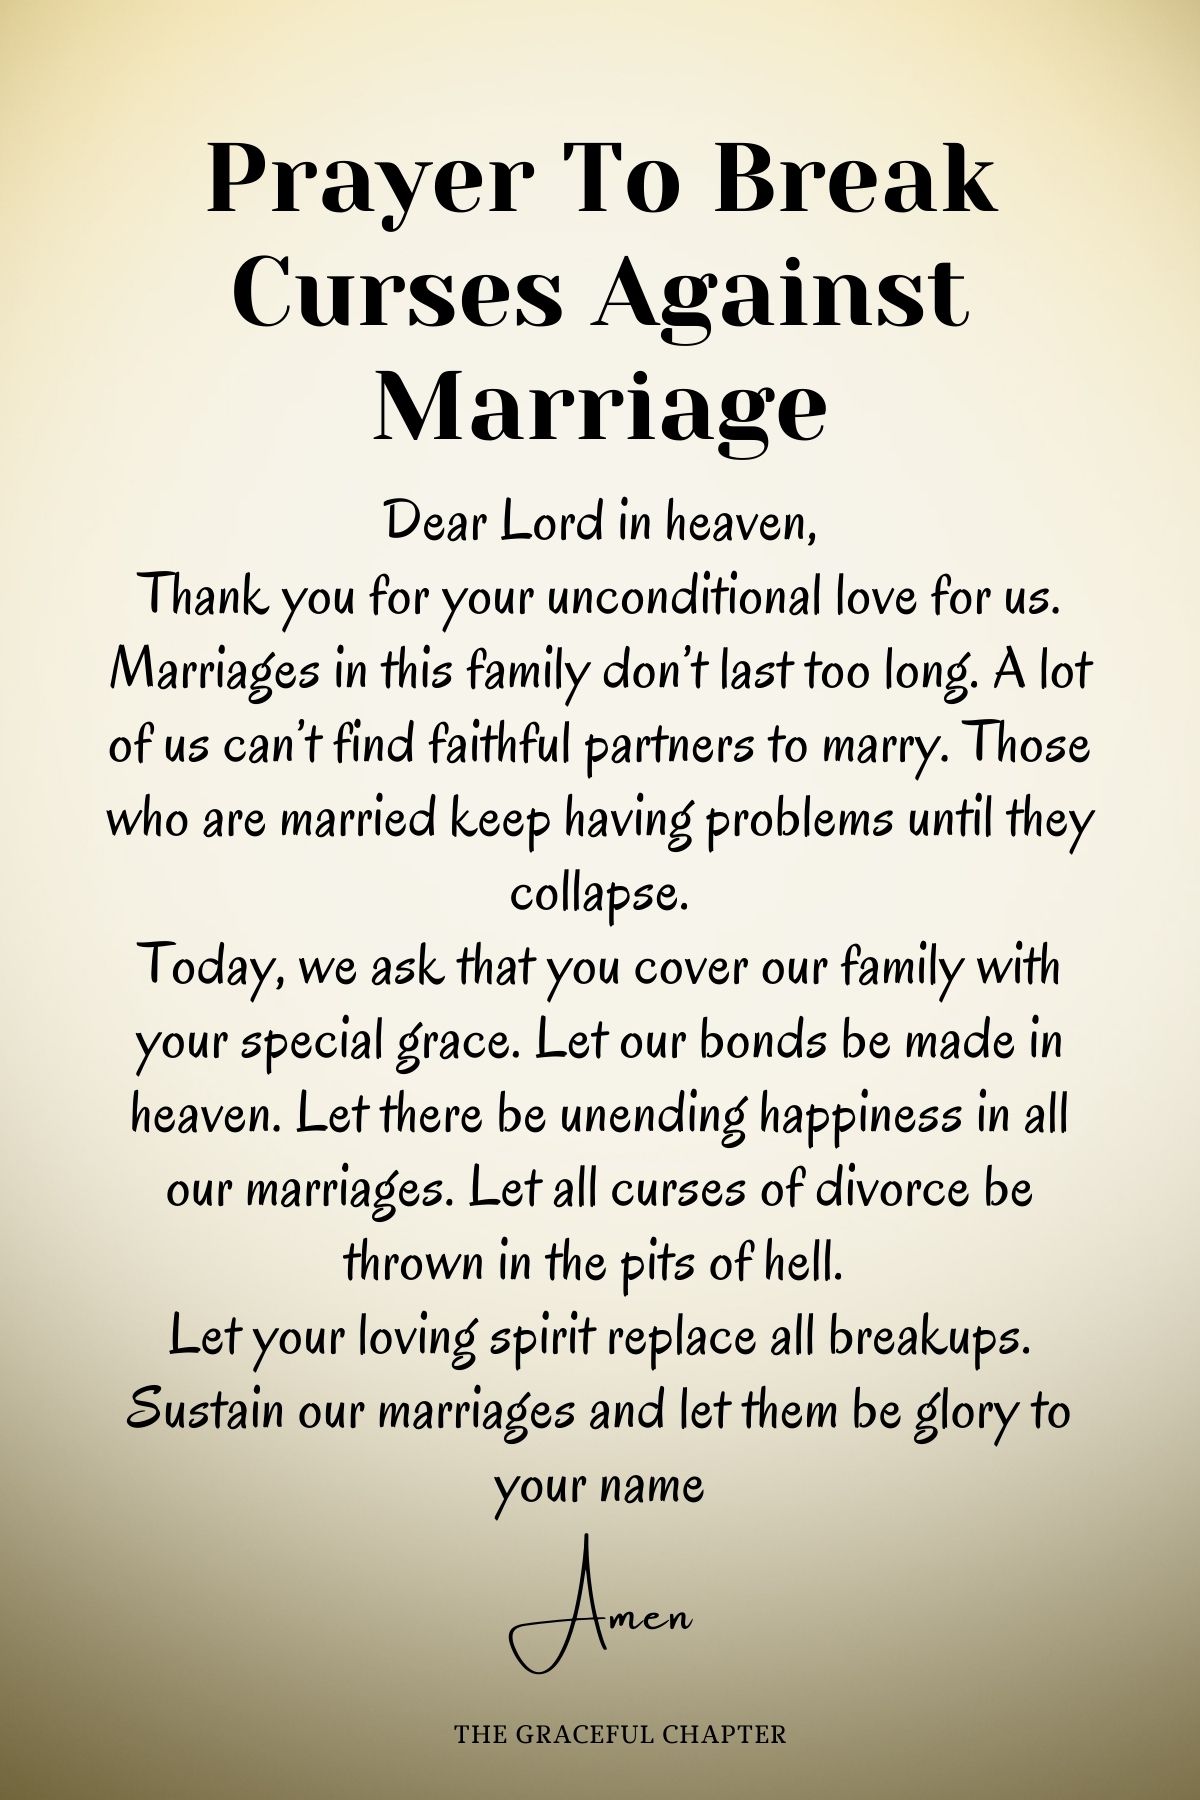 Prayer to break curses against marriage